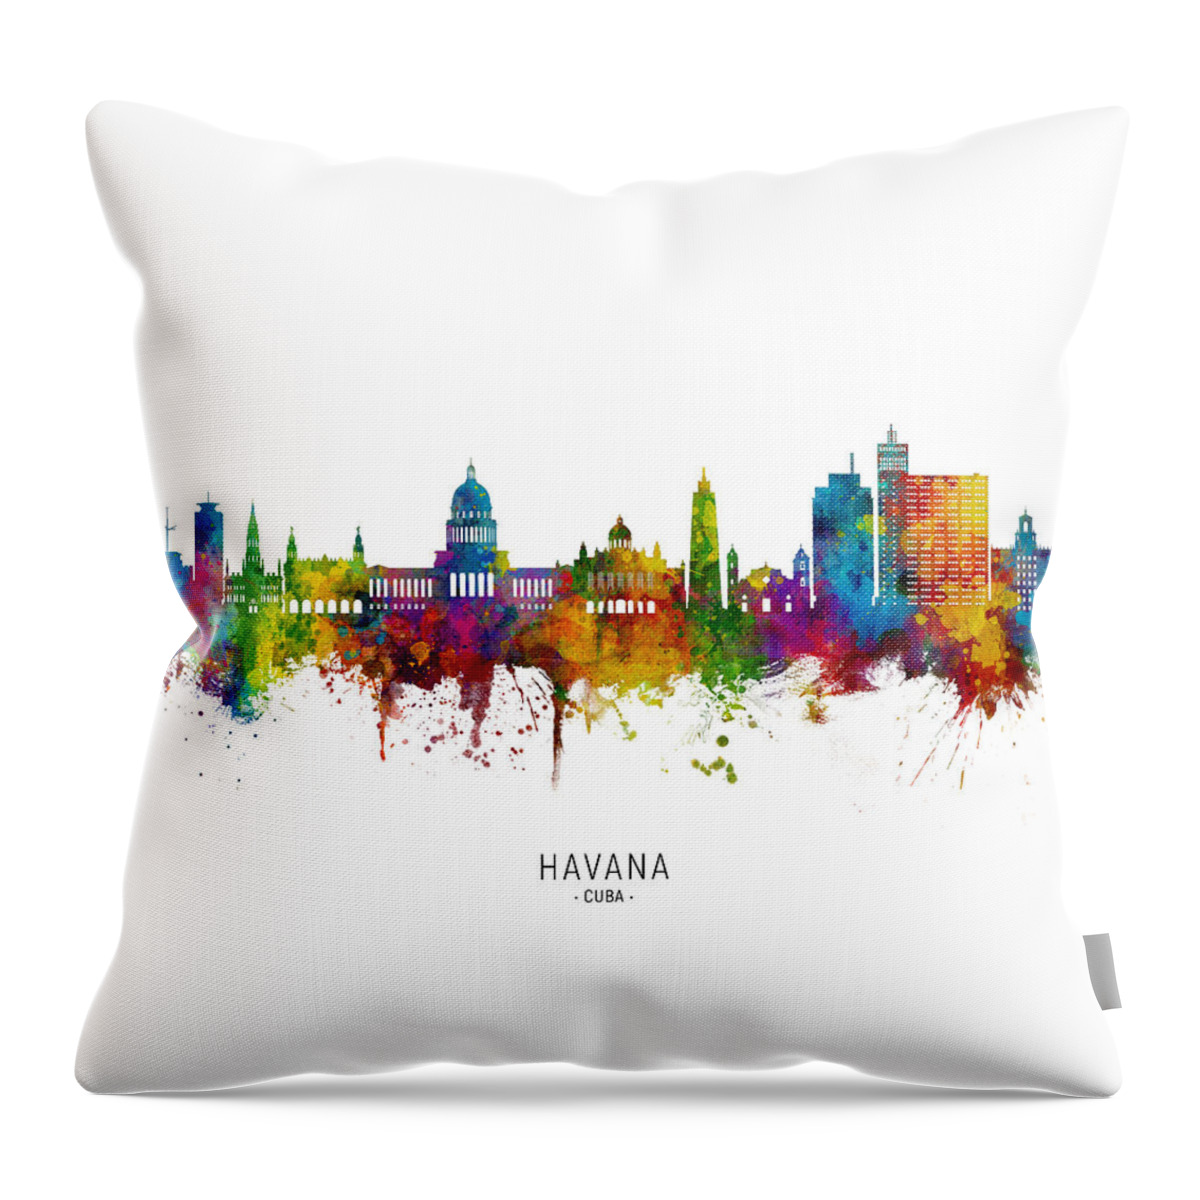 Havana Throw Pillow featuring the digital art Havana Cuba Skyline by Michael Tompsett